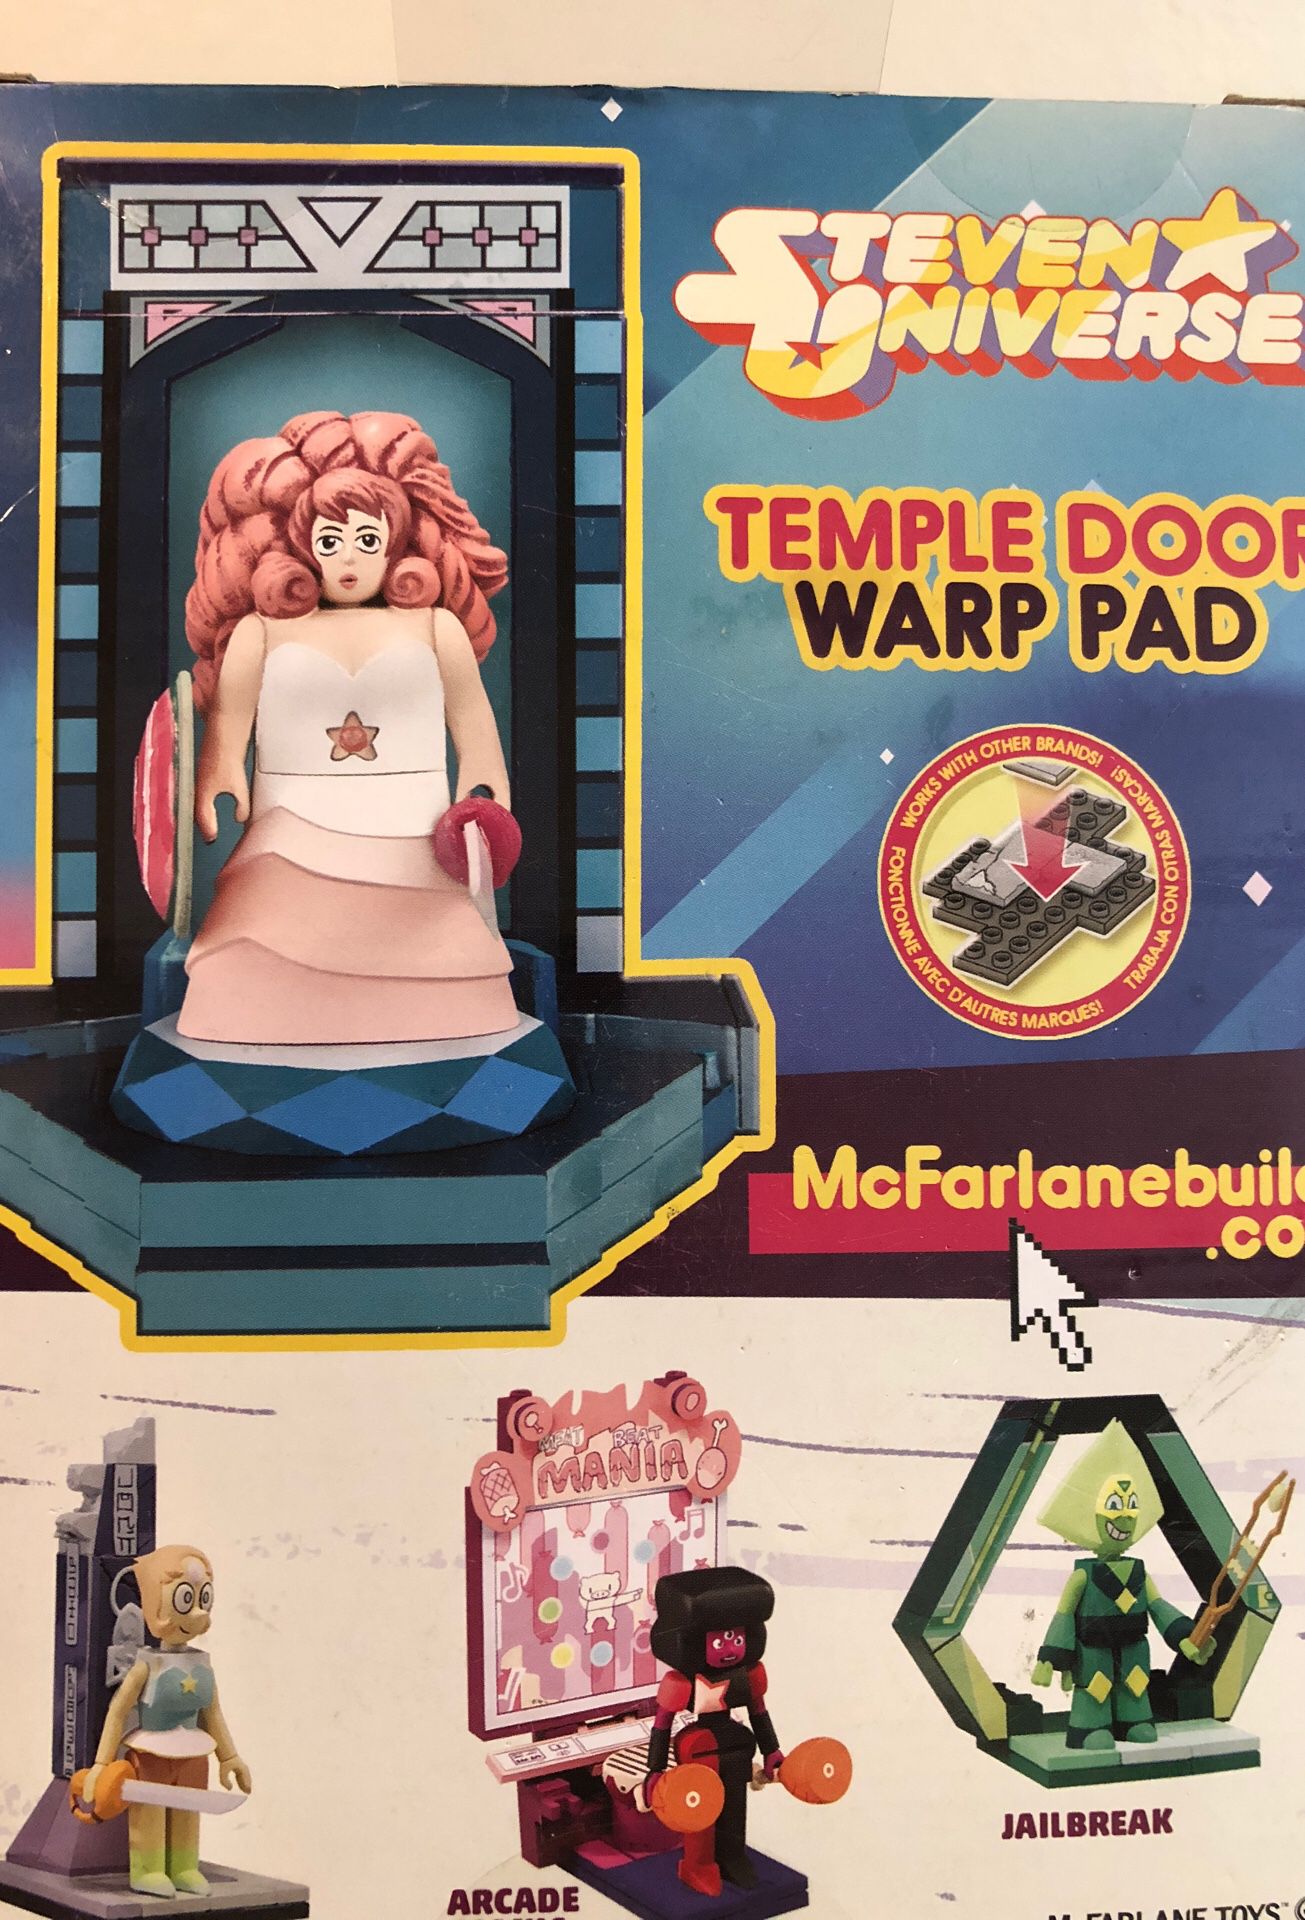 Stevens Universe Rose Quartz Temple Warp Pad (Nerd Toy) Cartoon Network lego